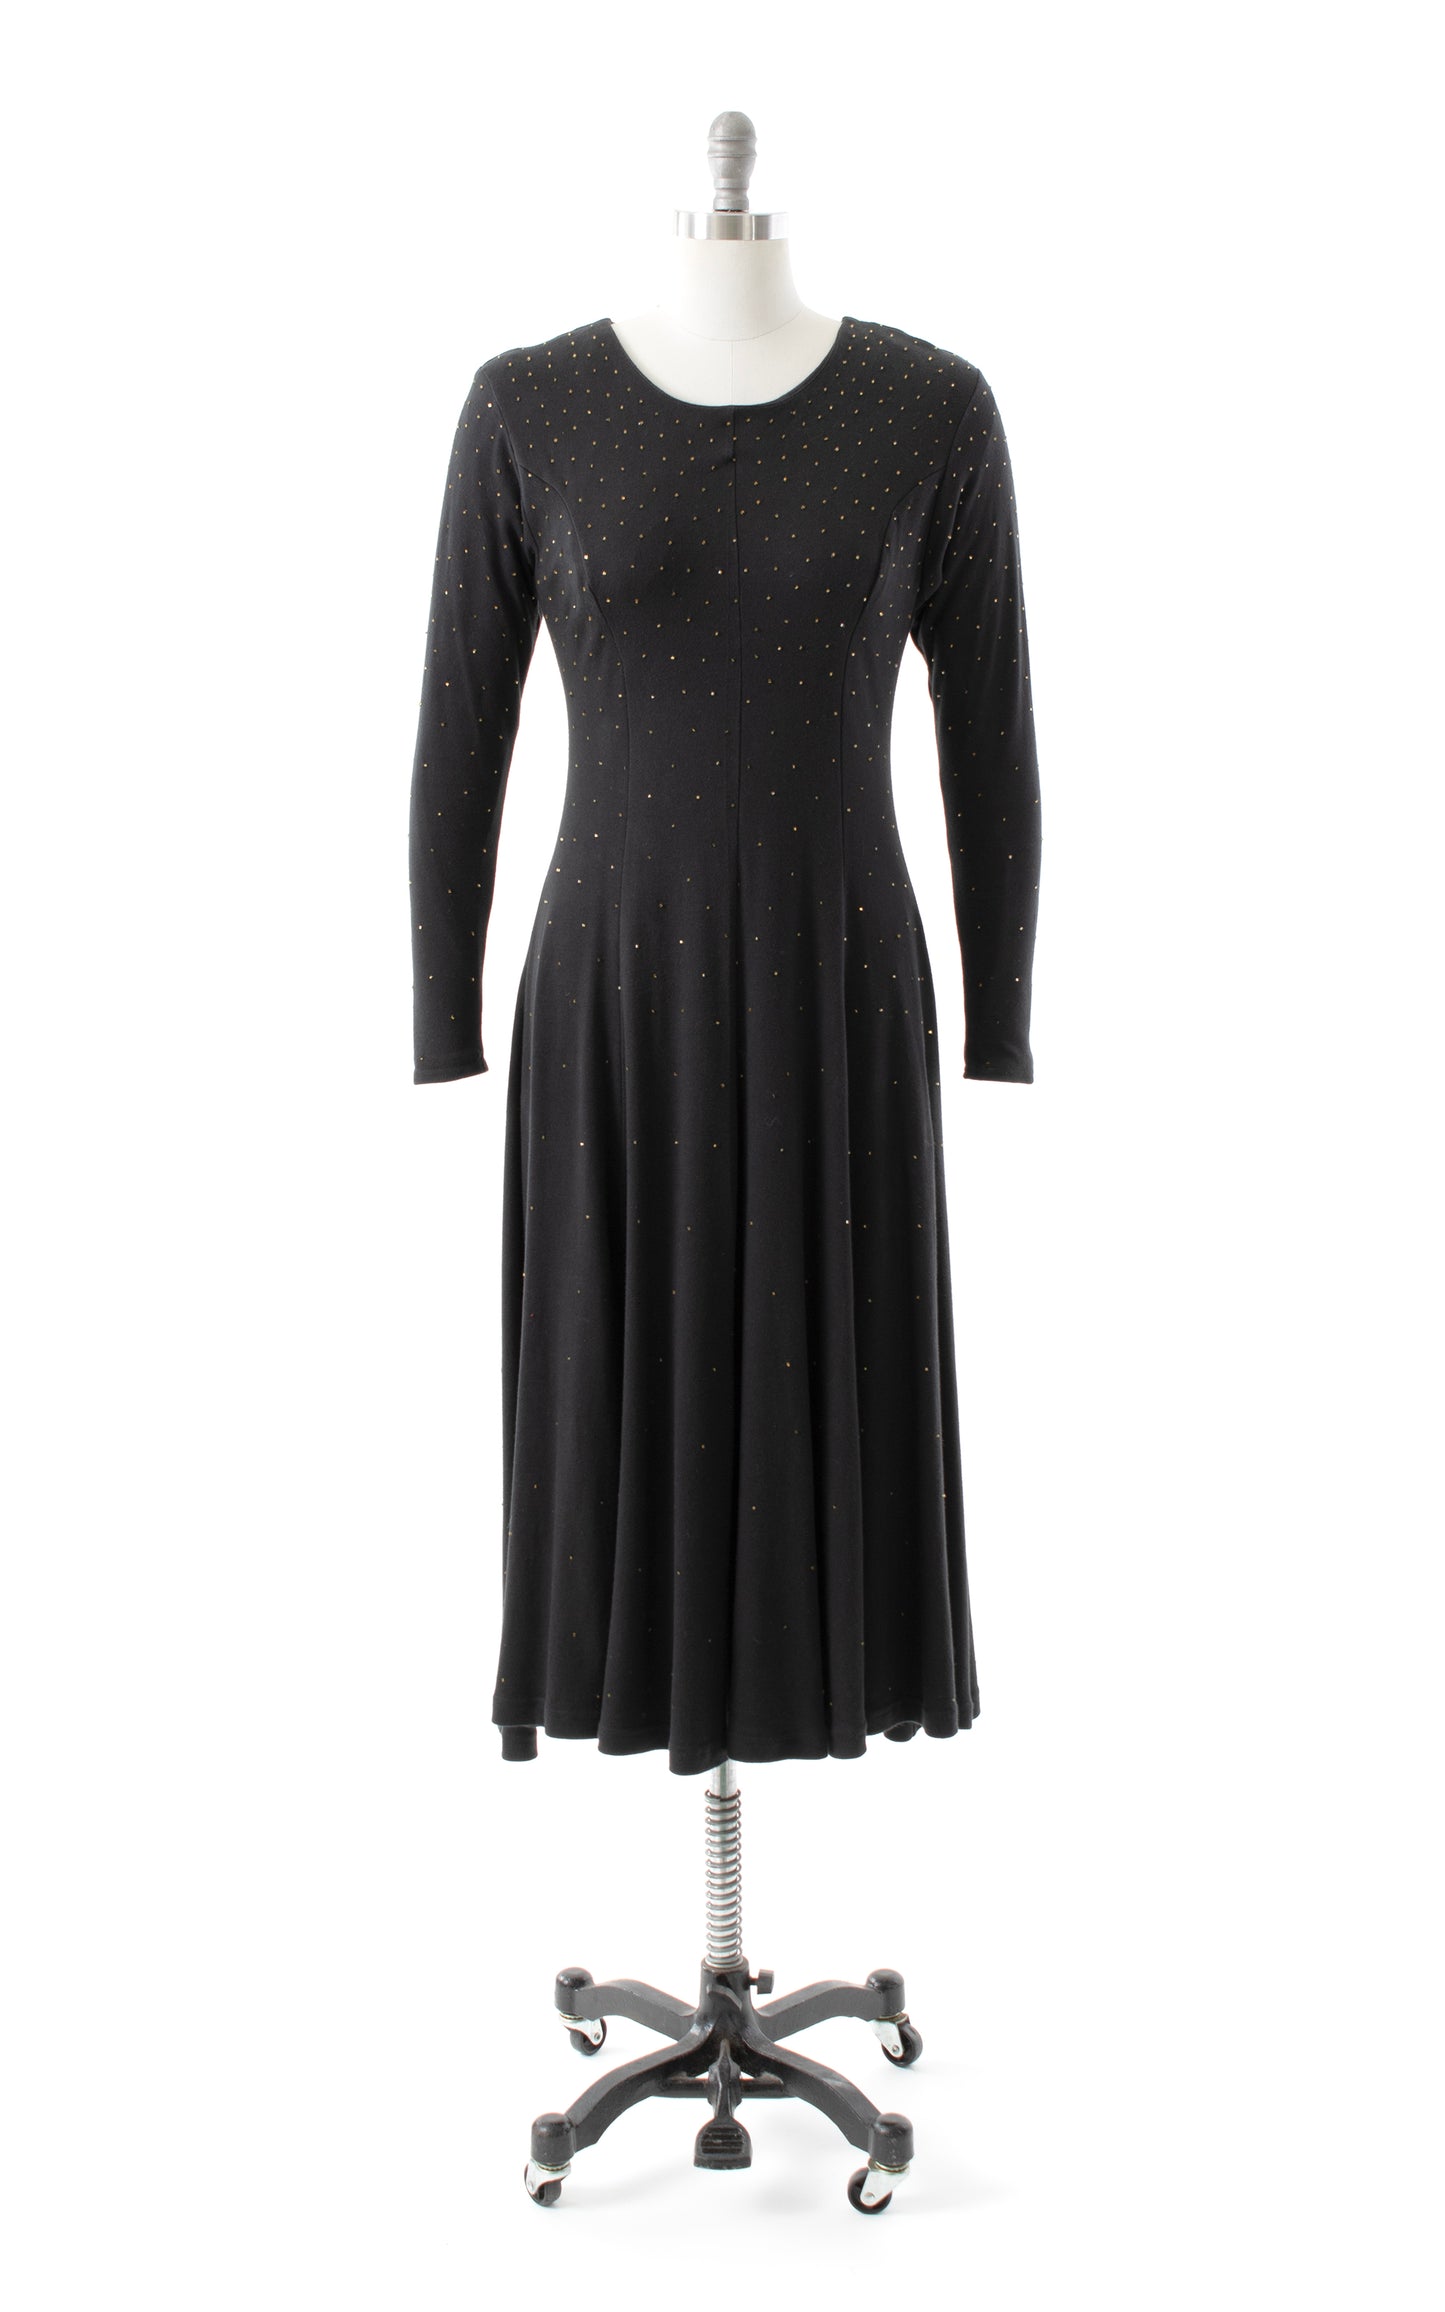 NEW ARRIVAL || 1980s Beaded Black Jersey Dress | medium/large